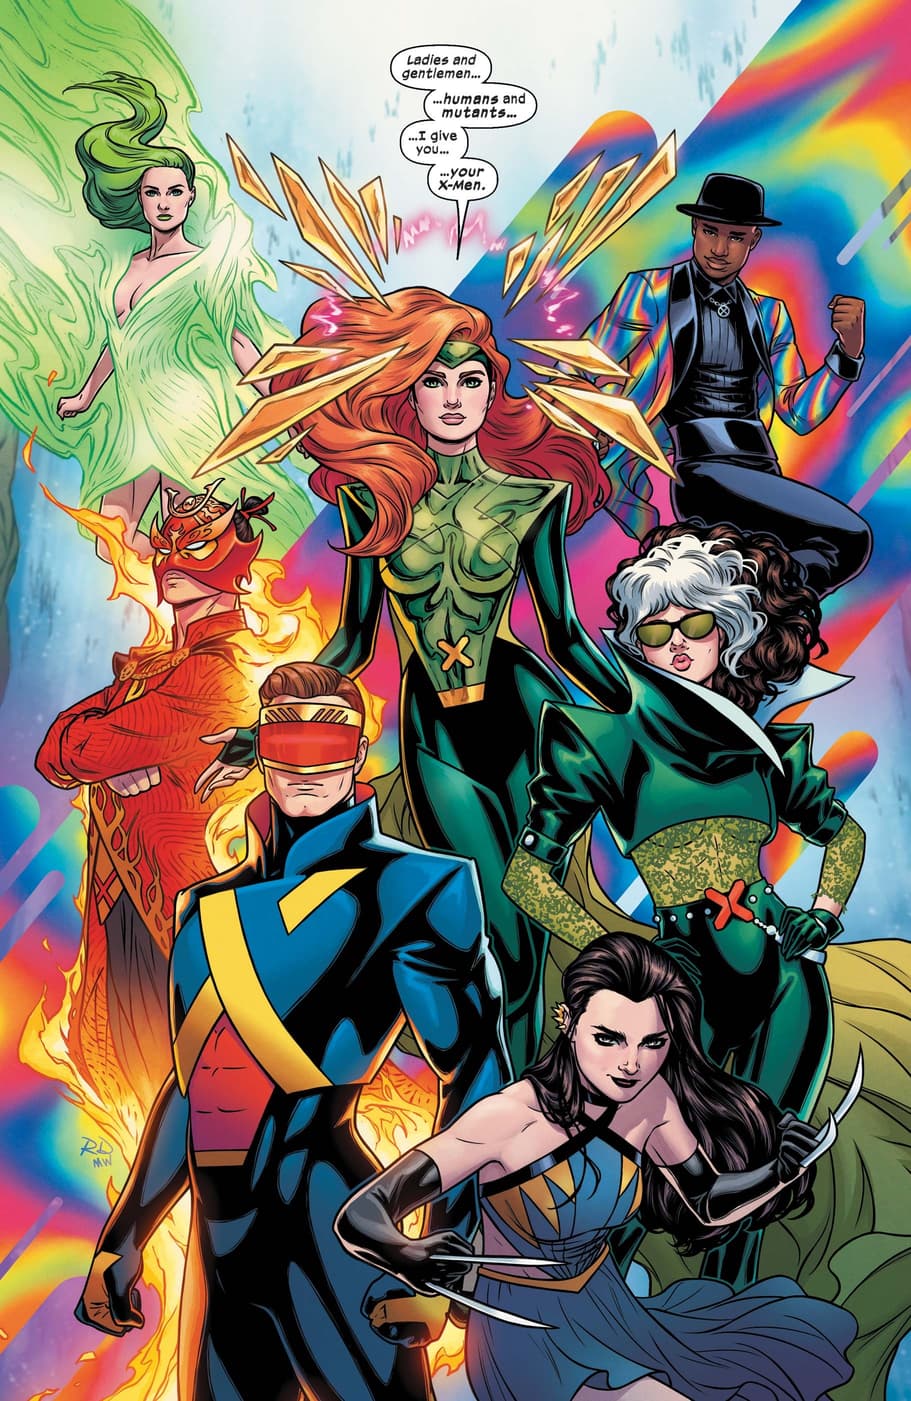 A new team of X-Men debut!